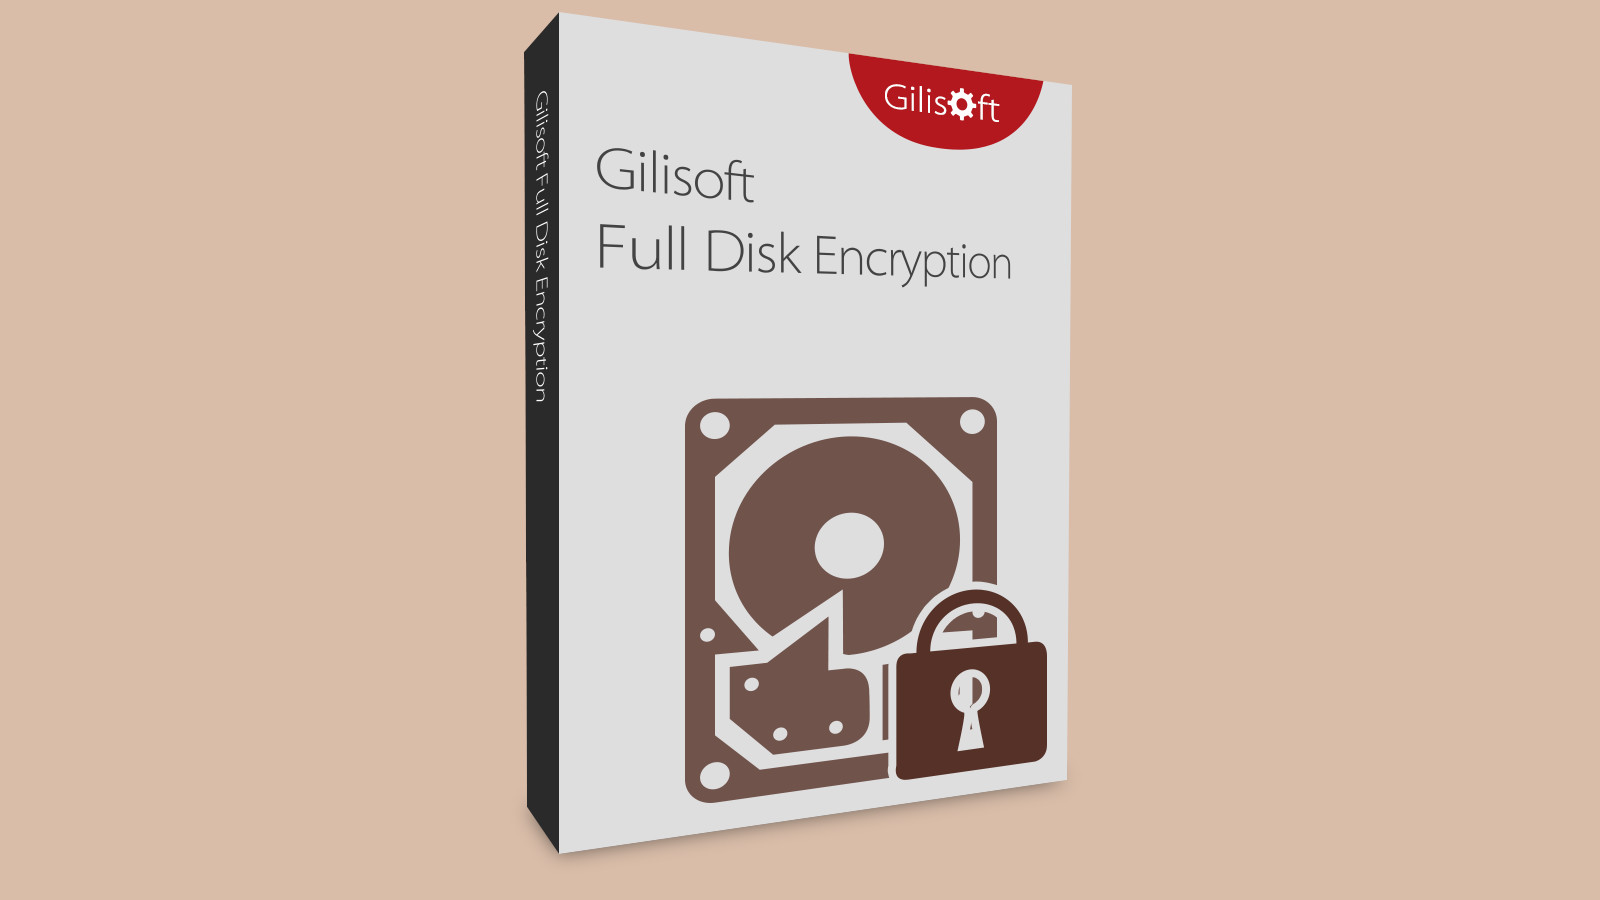 Gilisoft Full Disk Encryption CD Key, 19.72 usd